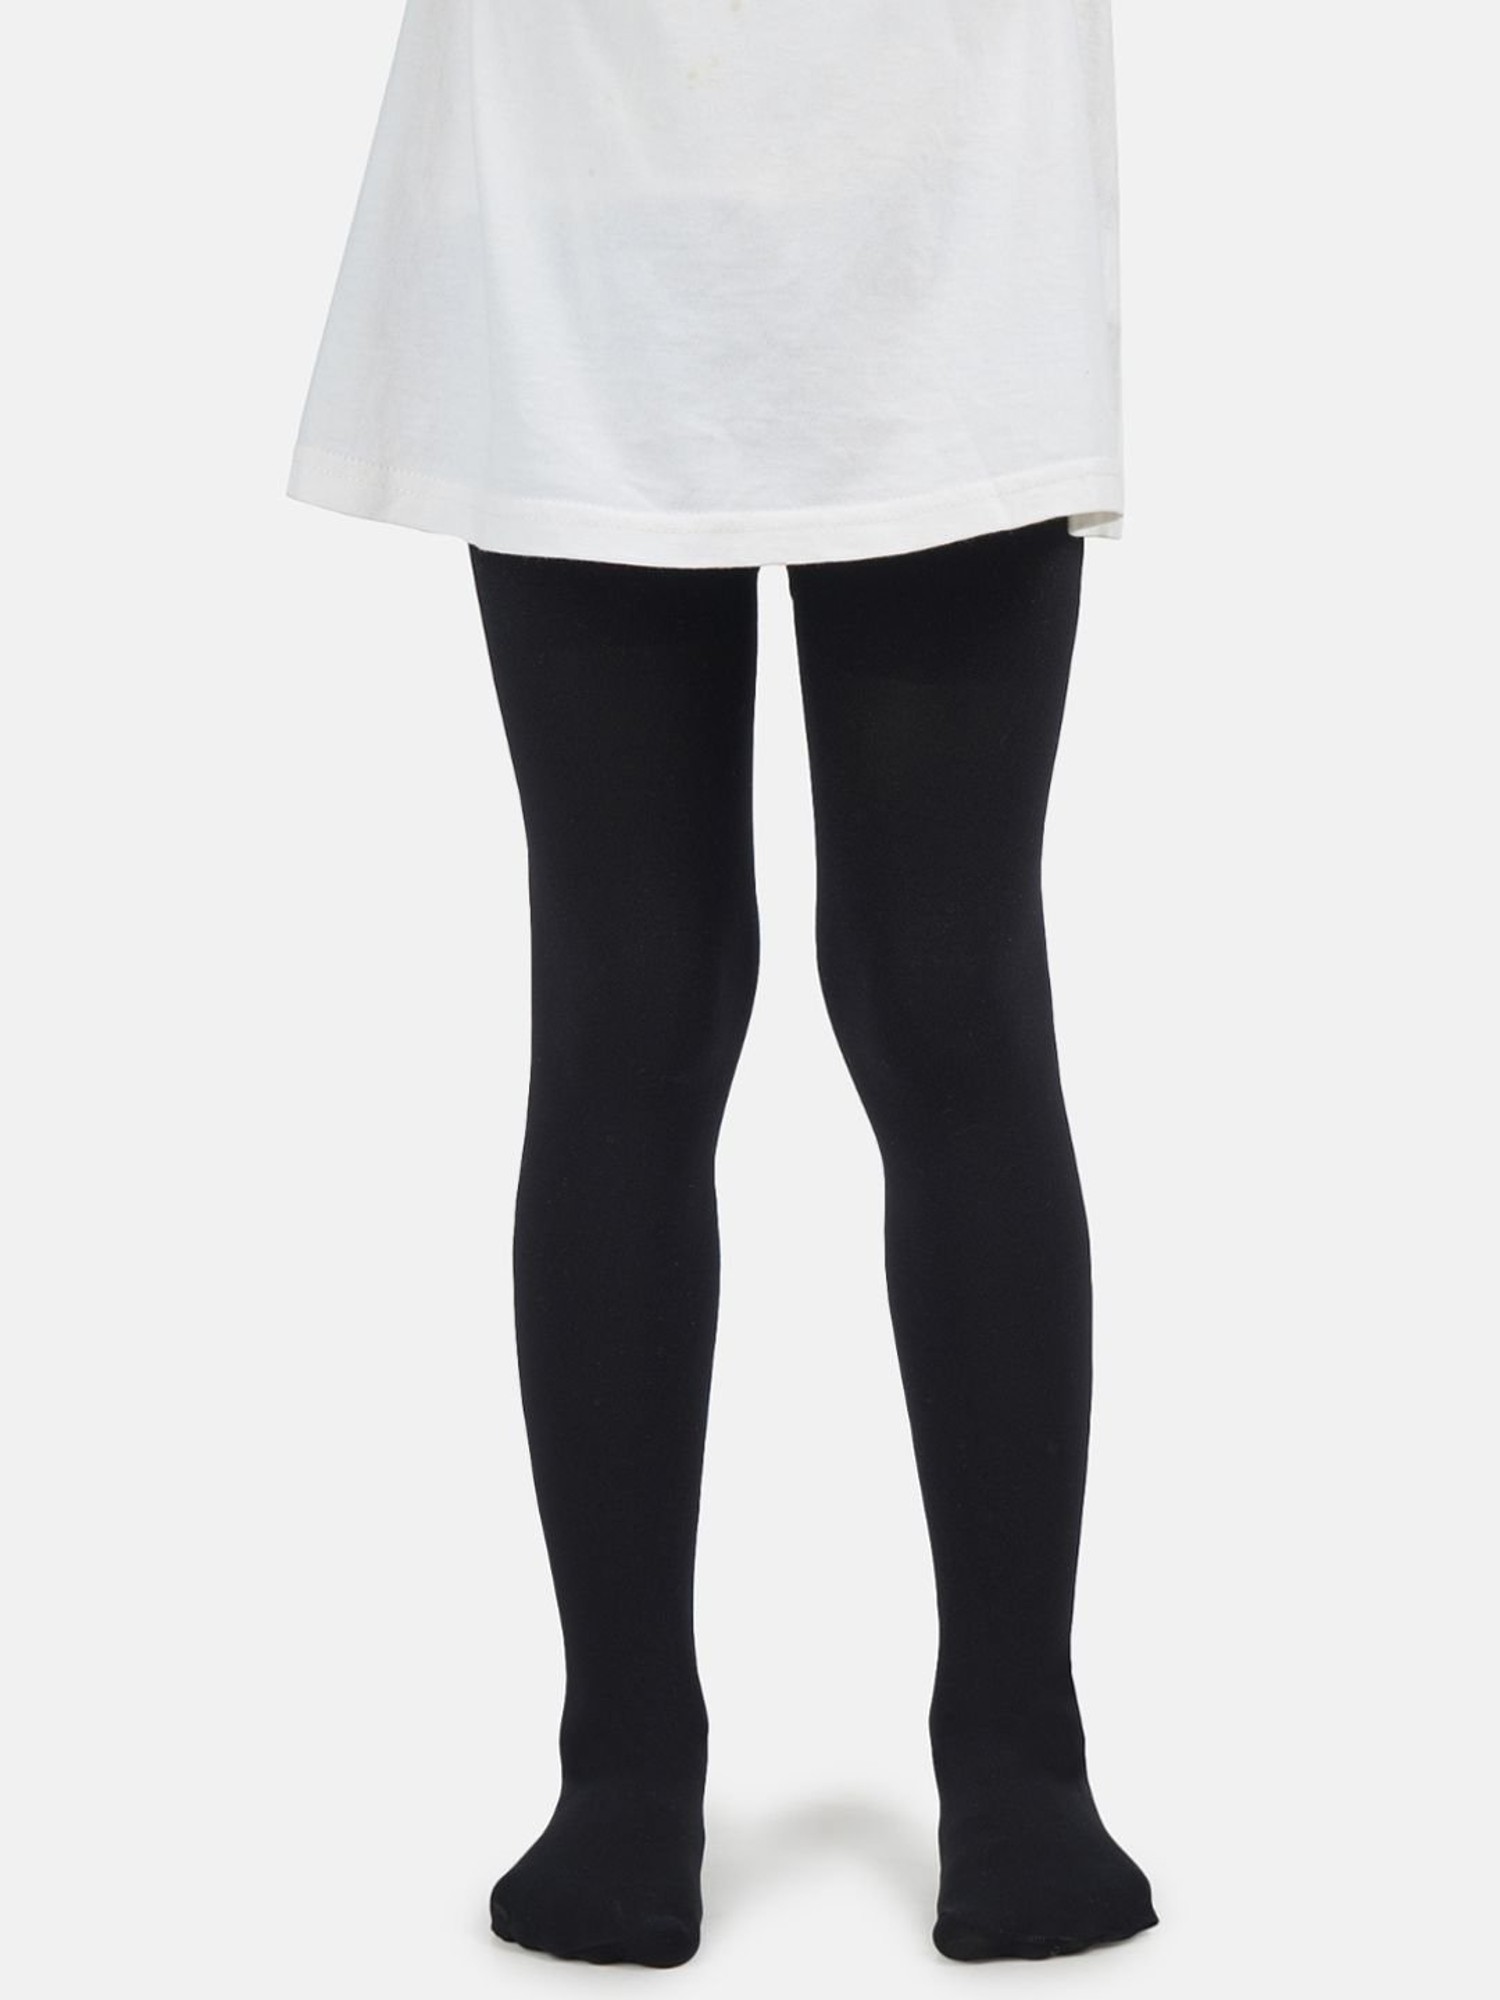 Buy NEXT2SKIN Kids Black Stockings for Girls Clothing Online @ Tata CLiQ